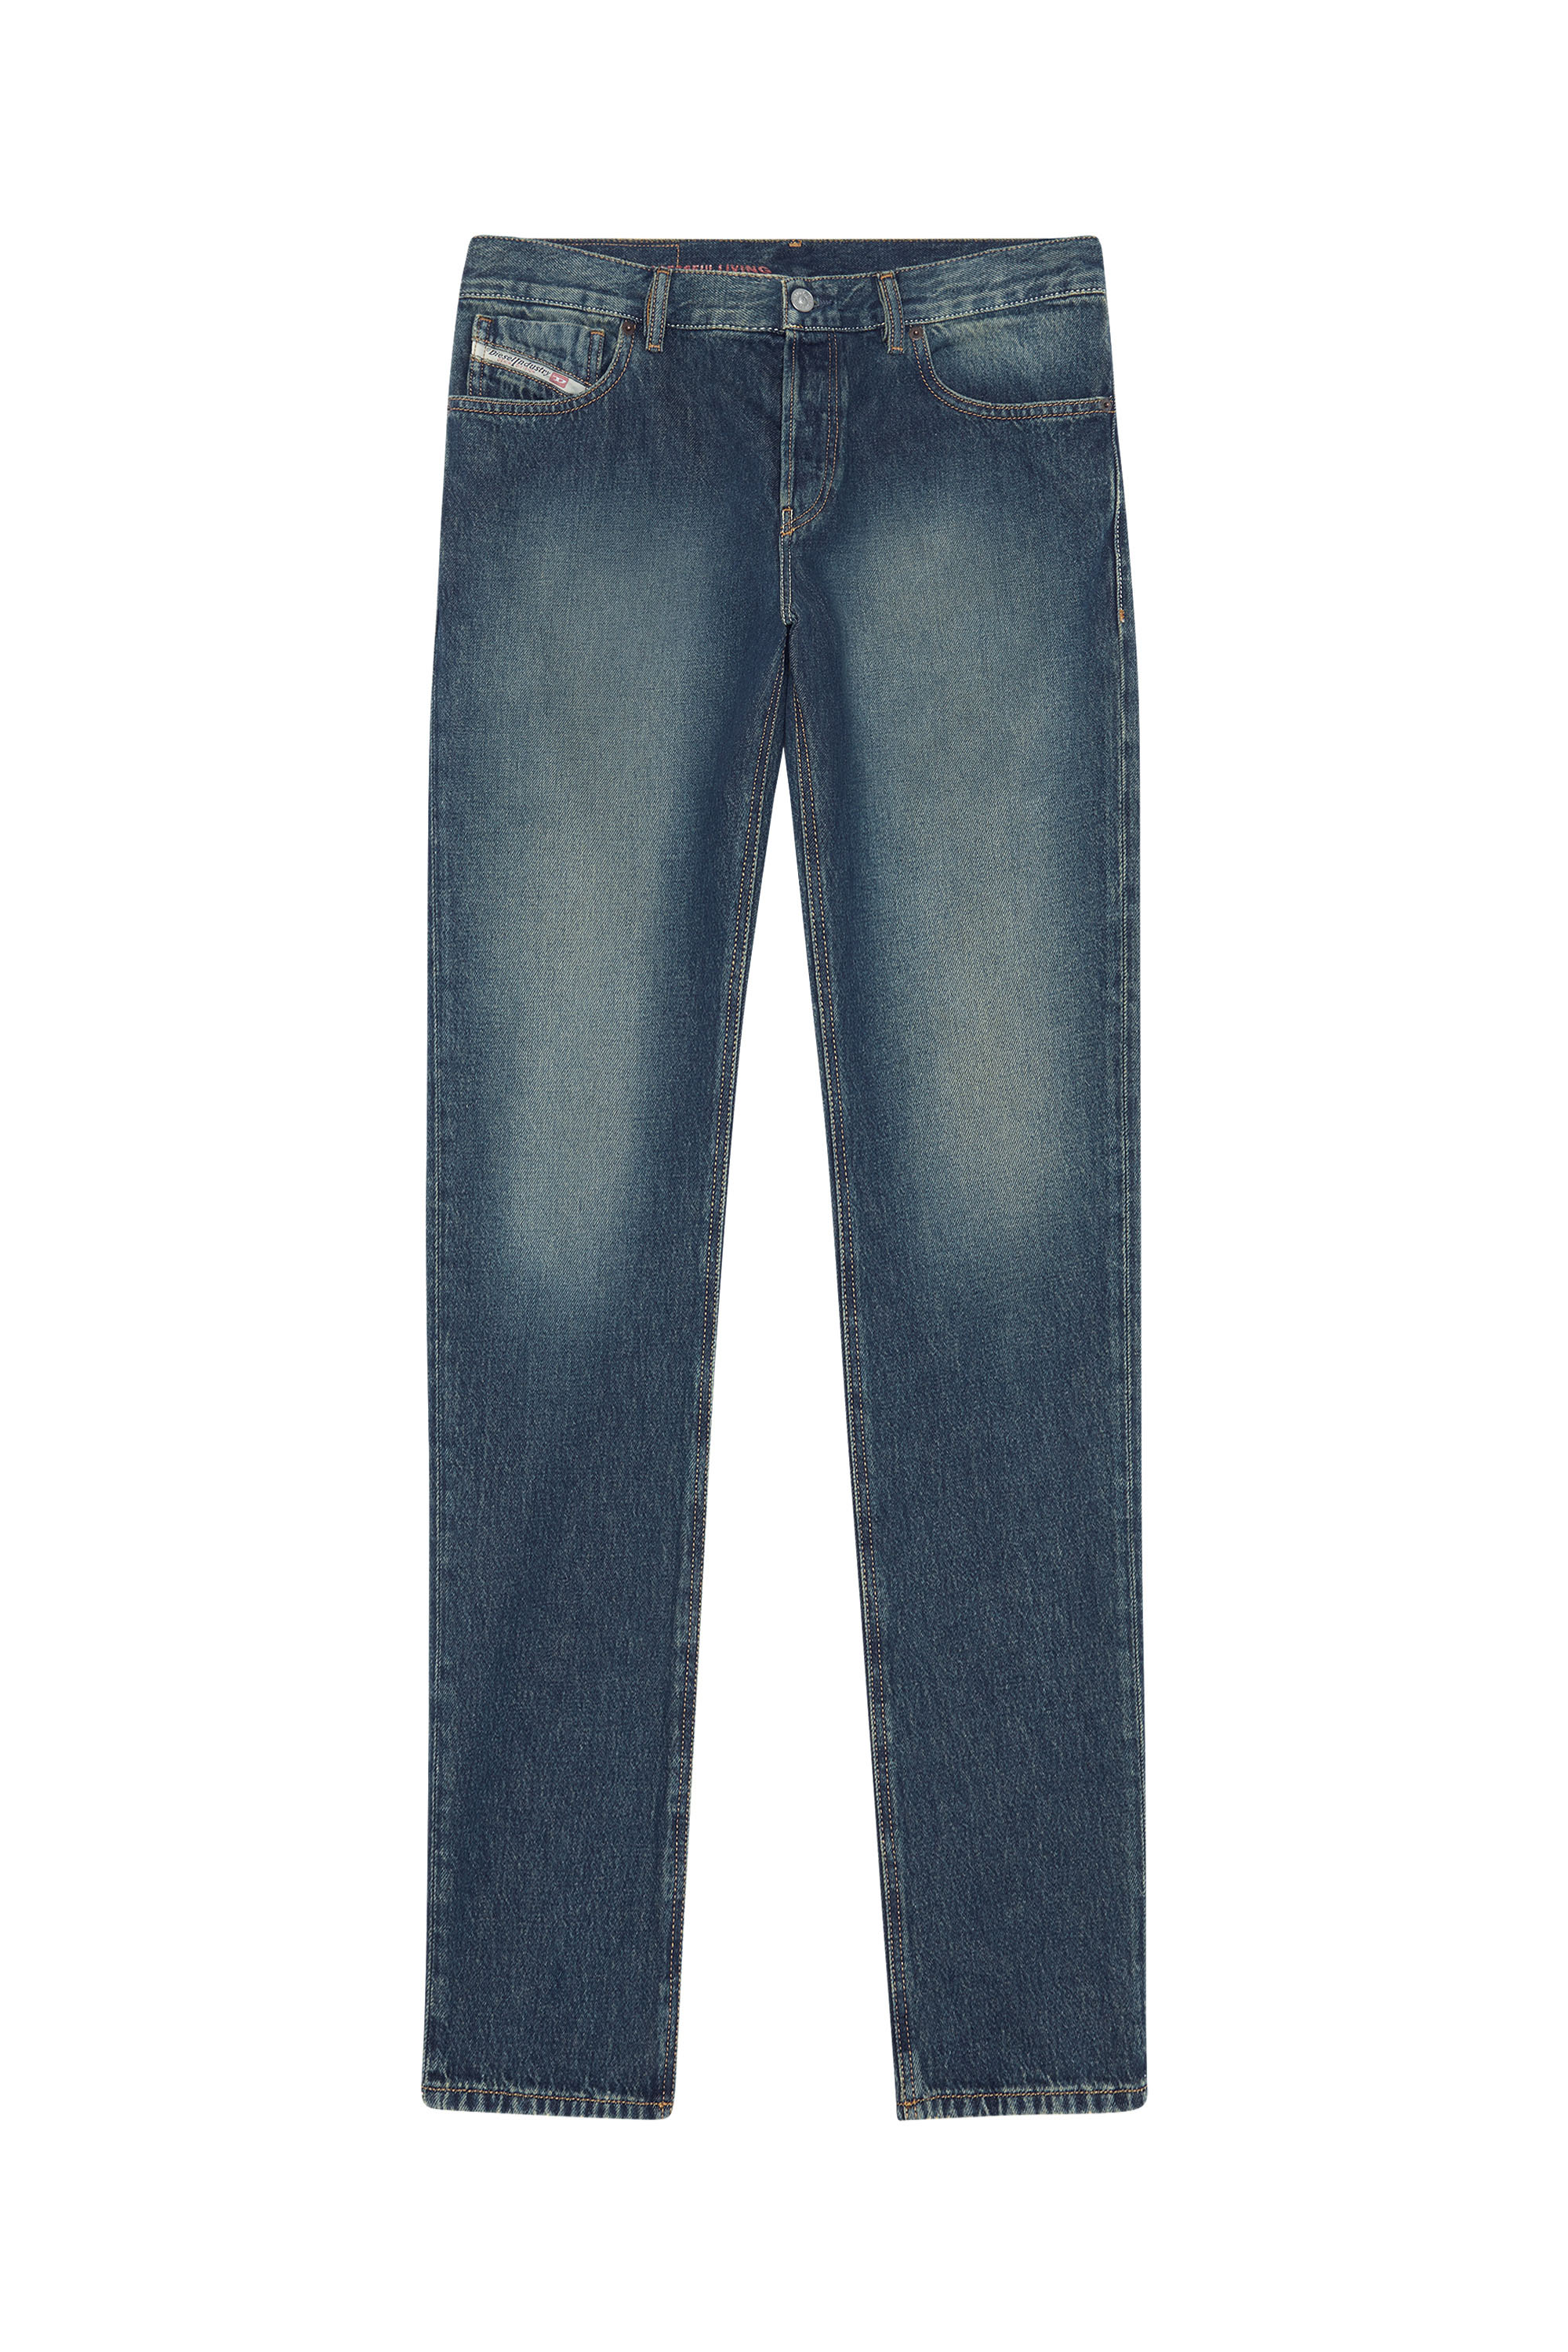 1995 D-SARK 09C04 Straight Jeans, Dunkelblau - Jeans